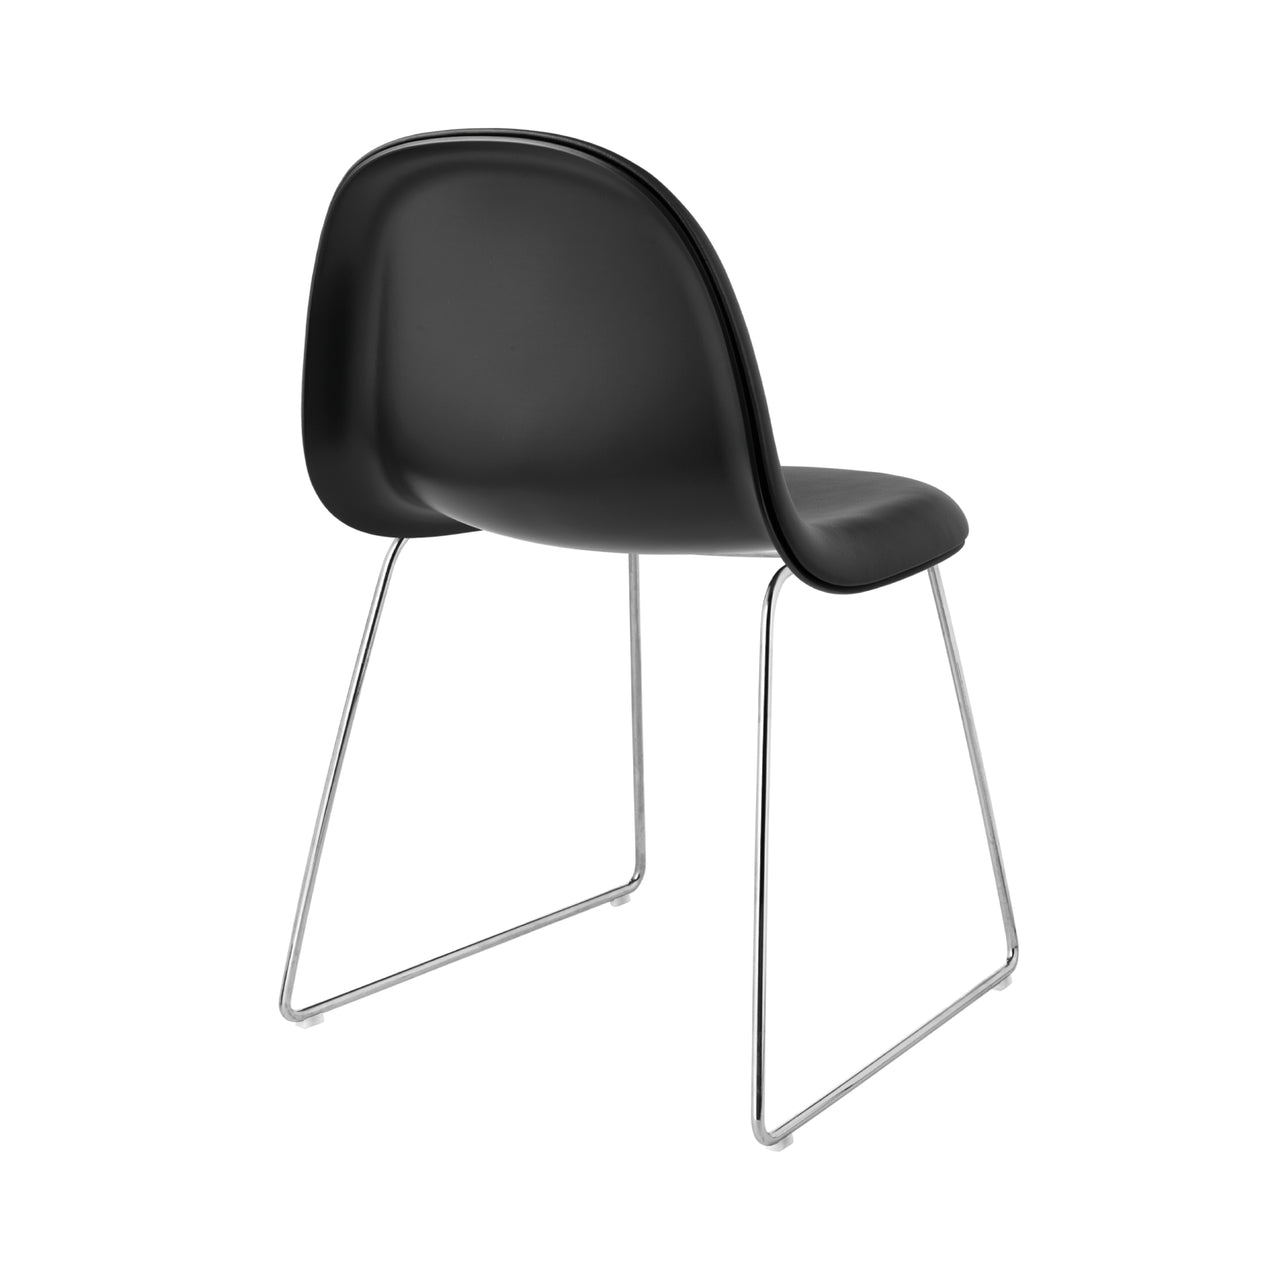 3D Dining Chair Sledge Base: Plastic Shell + Front Upholstered + Chrome